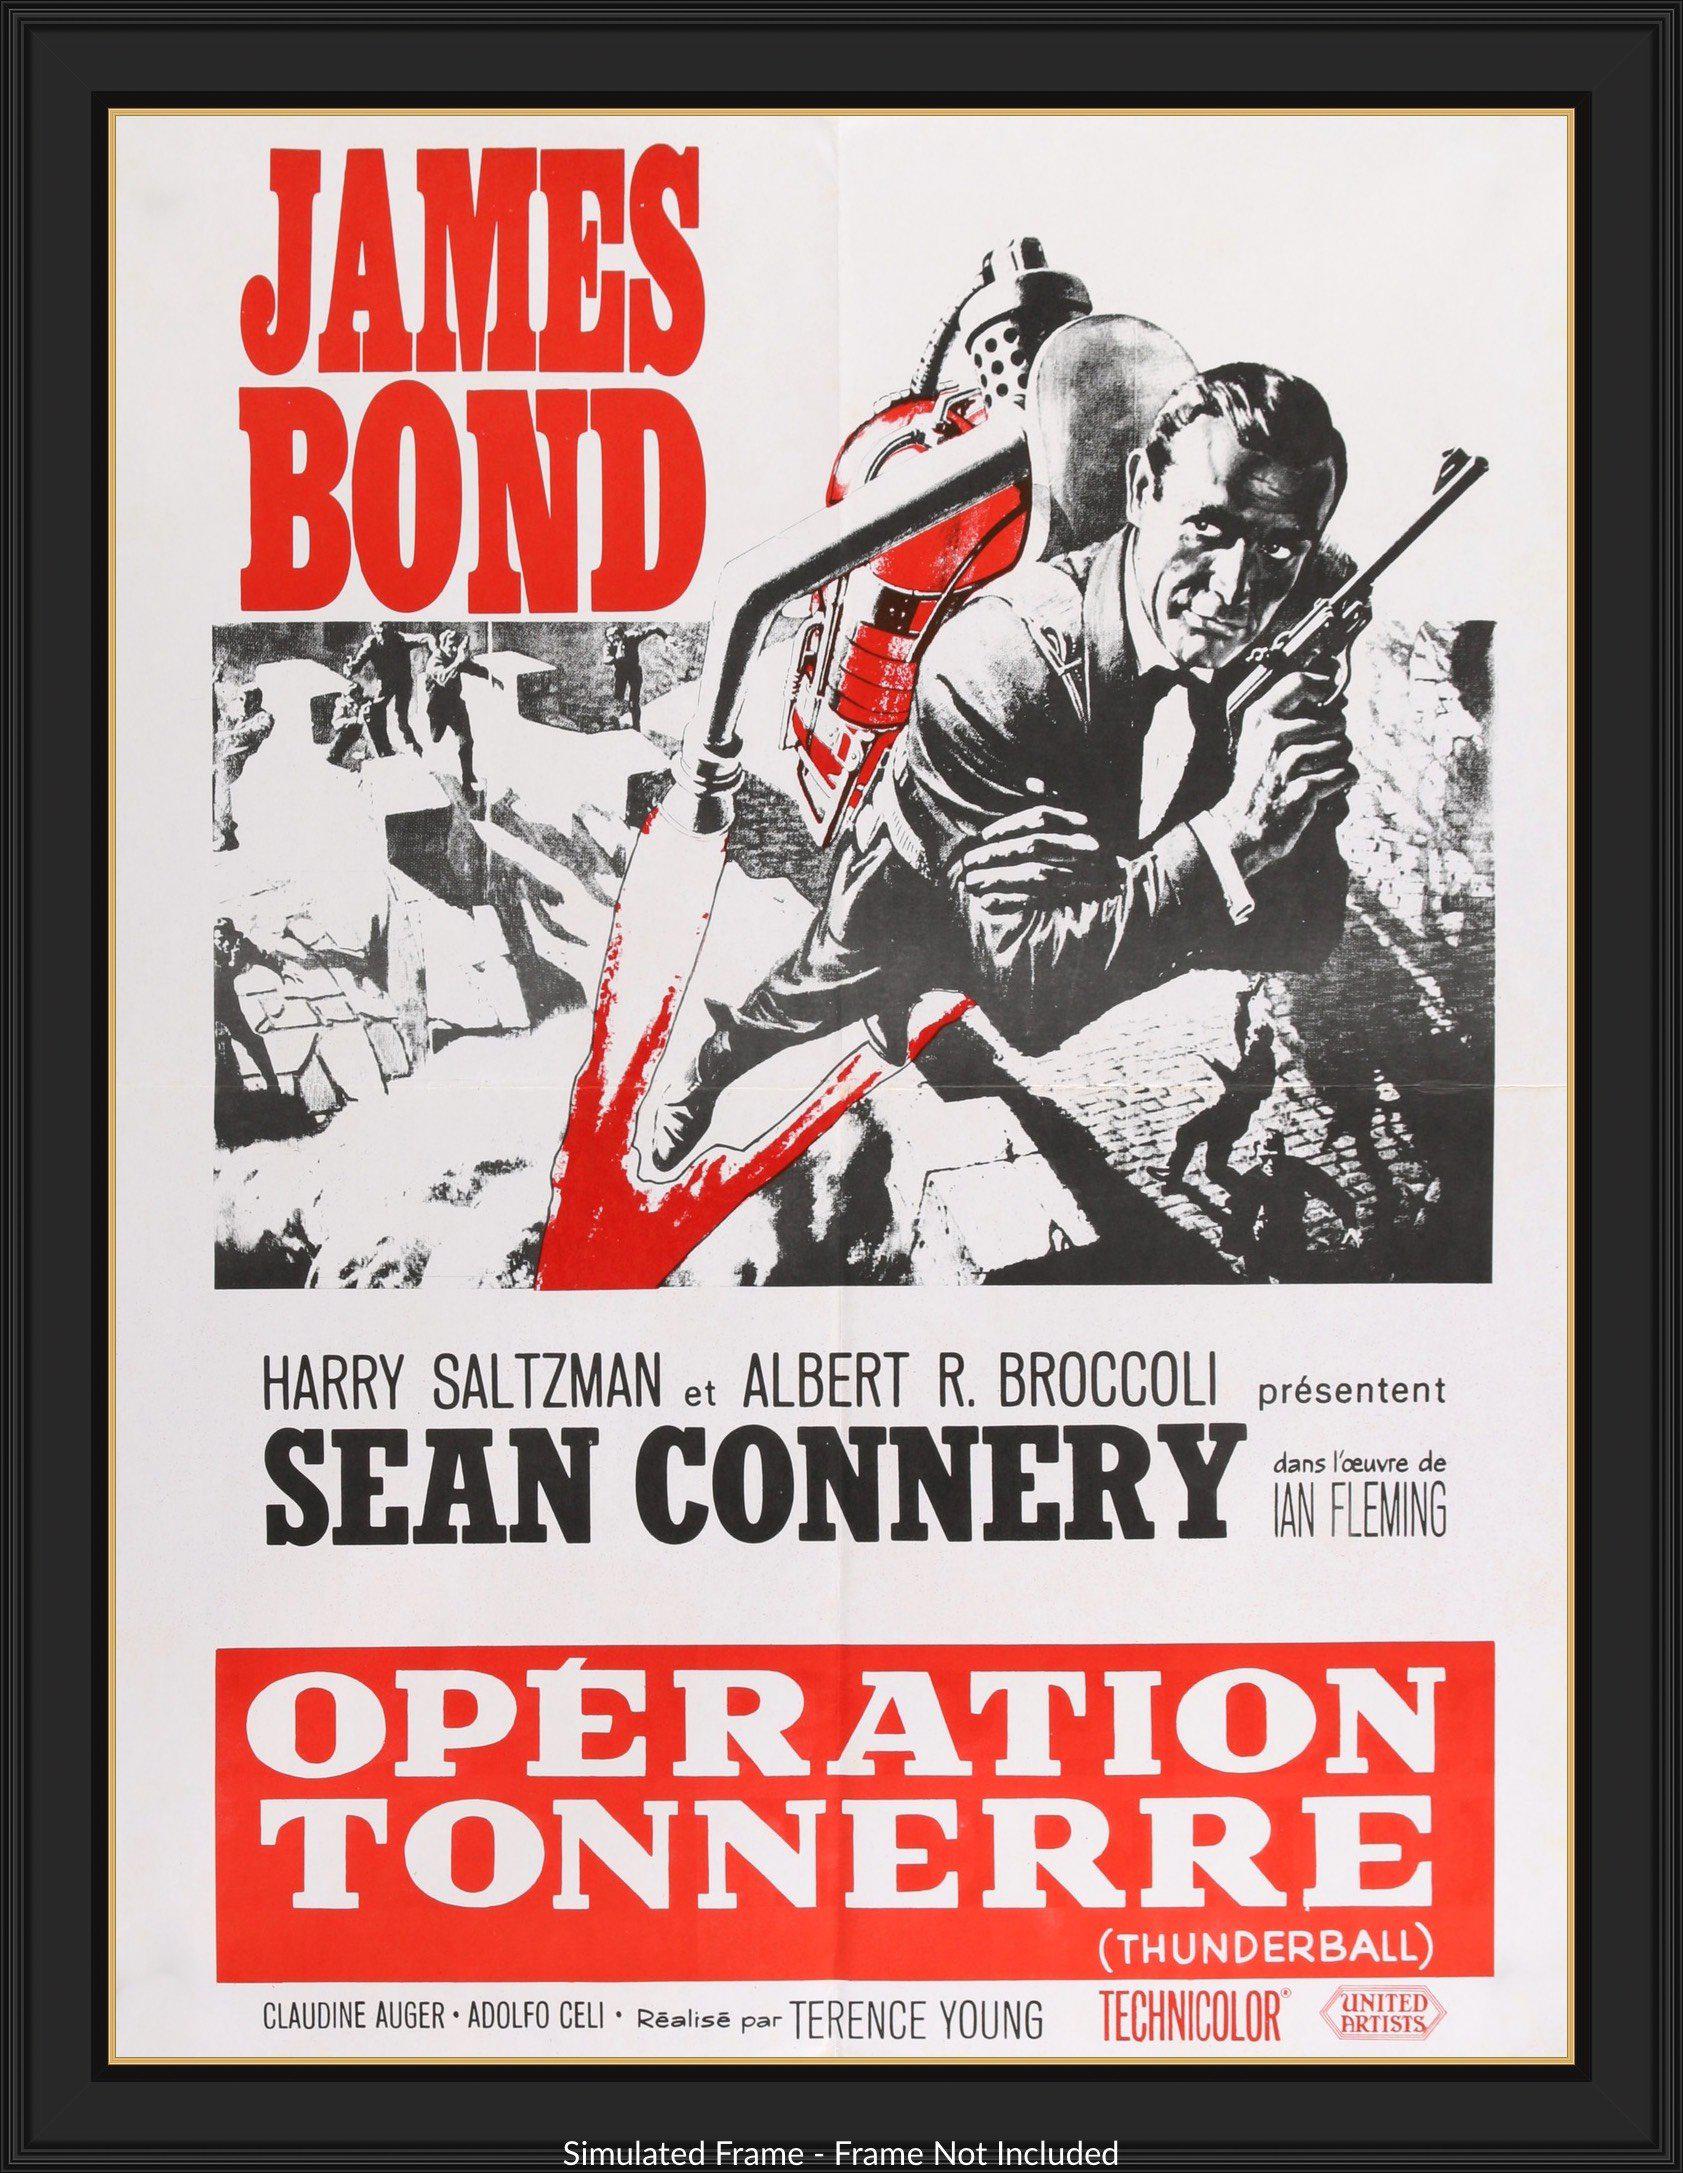 Thunderball (1965) original movie poster for sale at Original Film Art